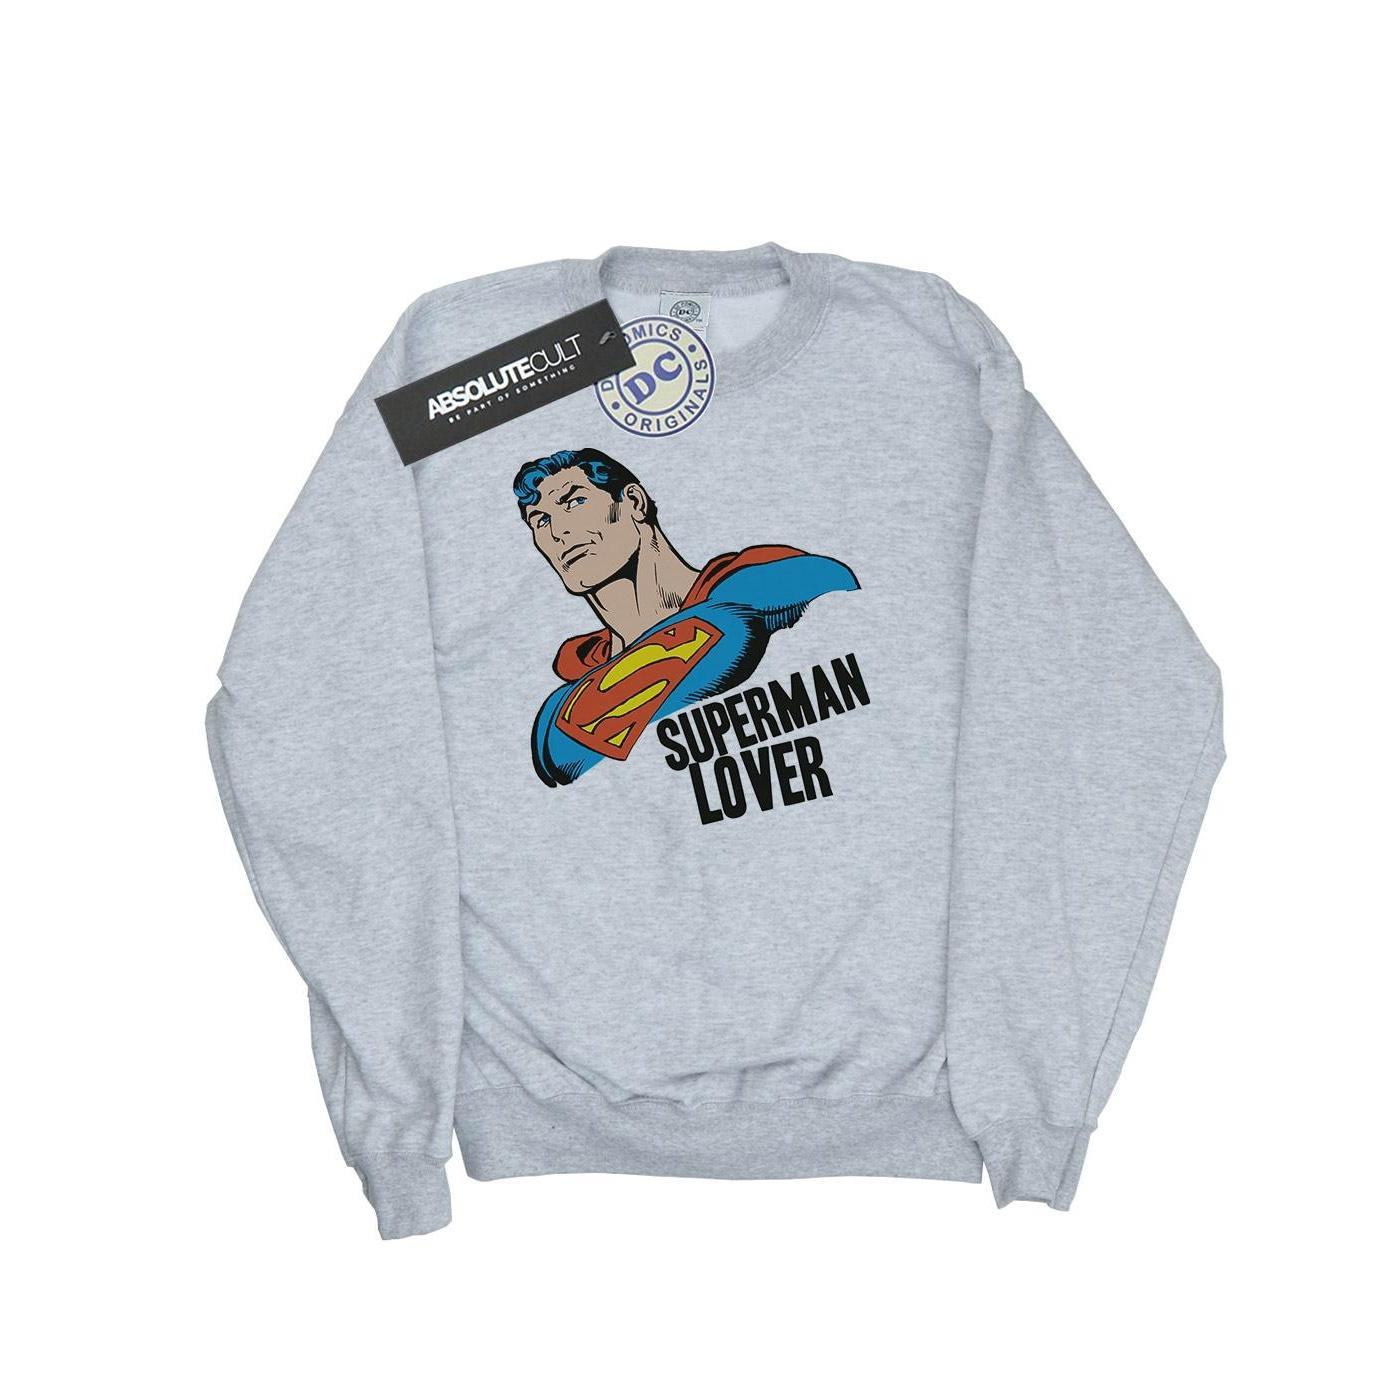 DC Comics Girls Superman Lover Sweatshirt (Sports Grey) (9-11 Years)